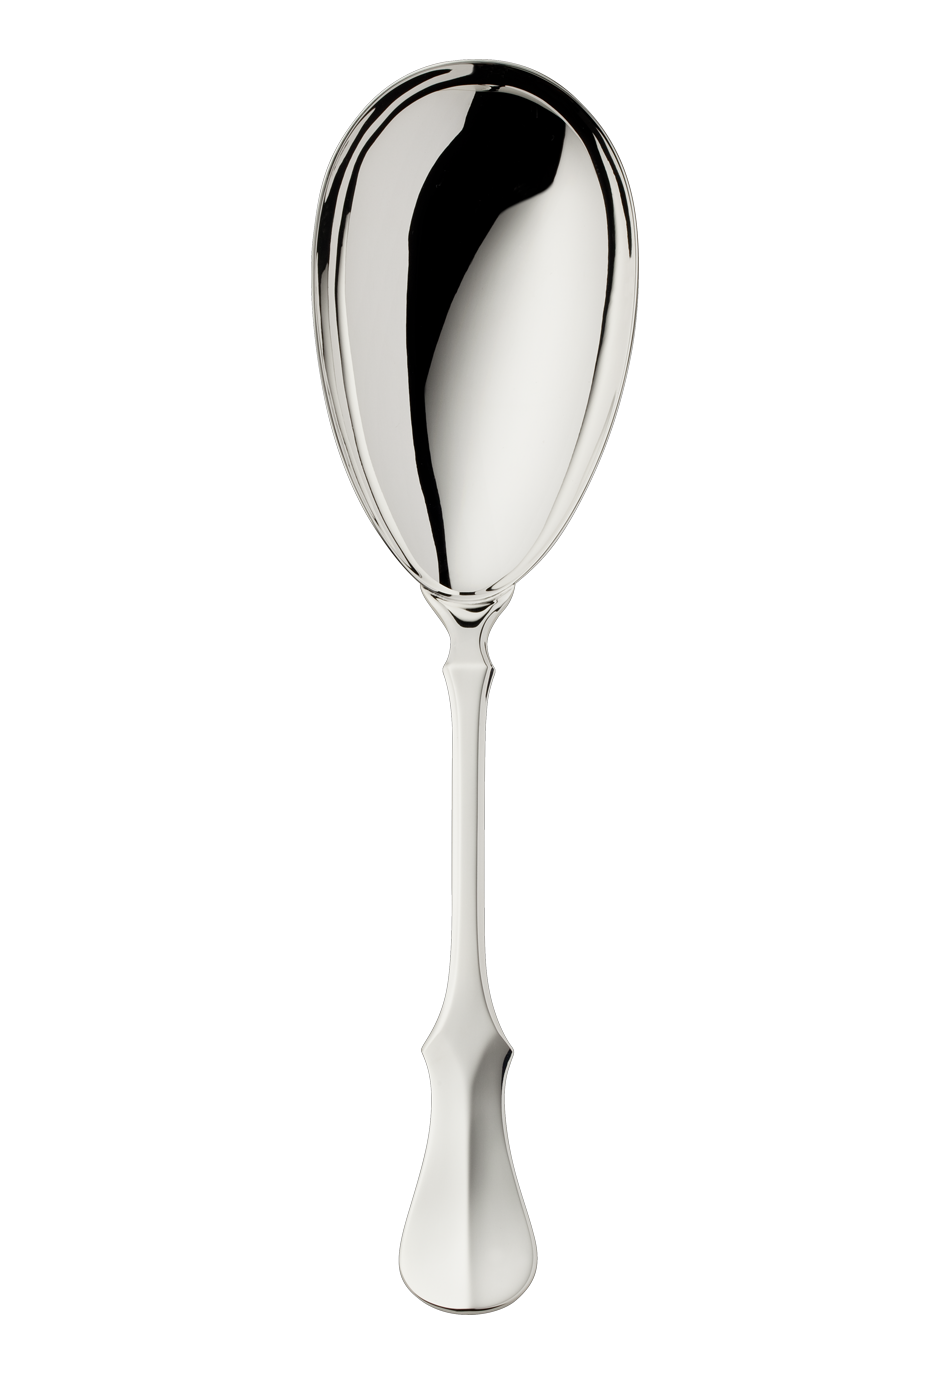 Alt-Kopenhagen Serving Spoon (150g massive silverplated)